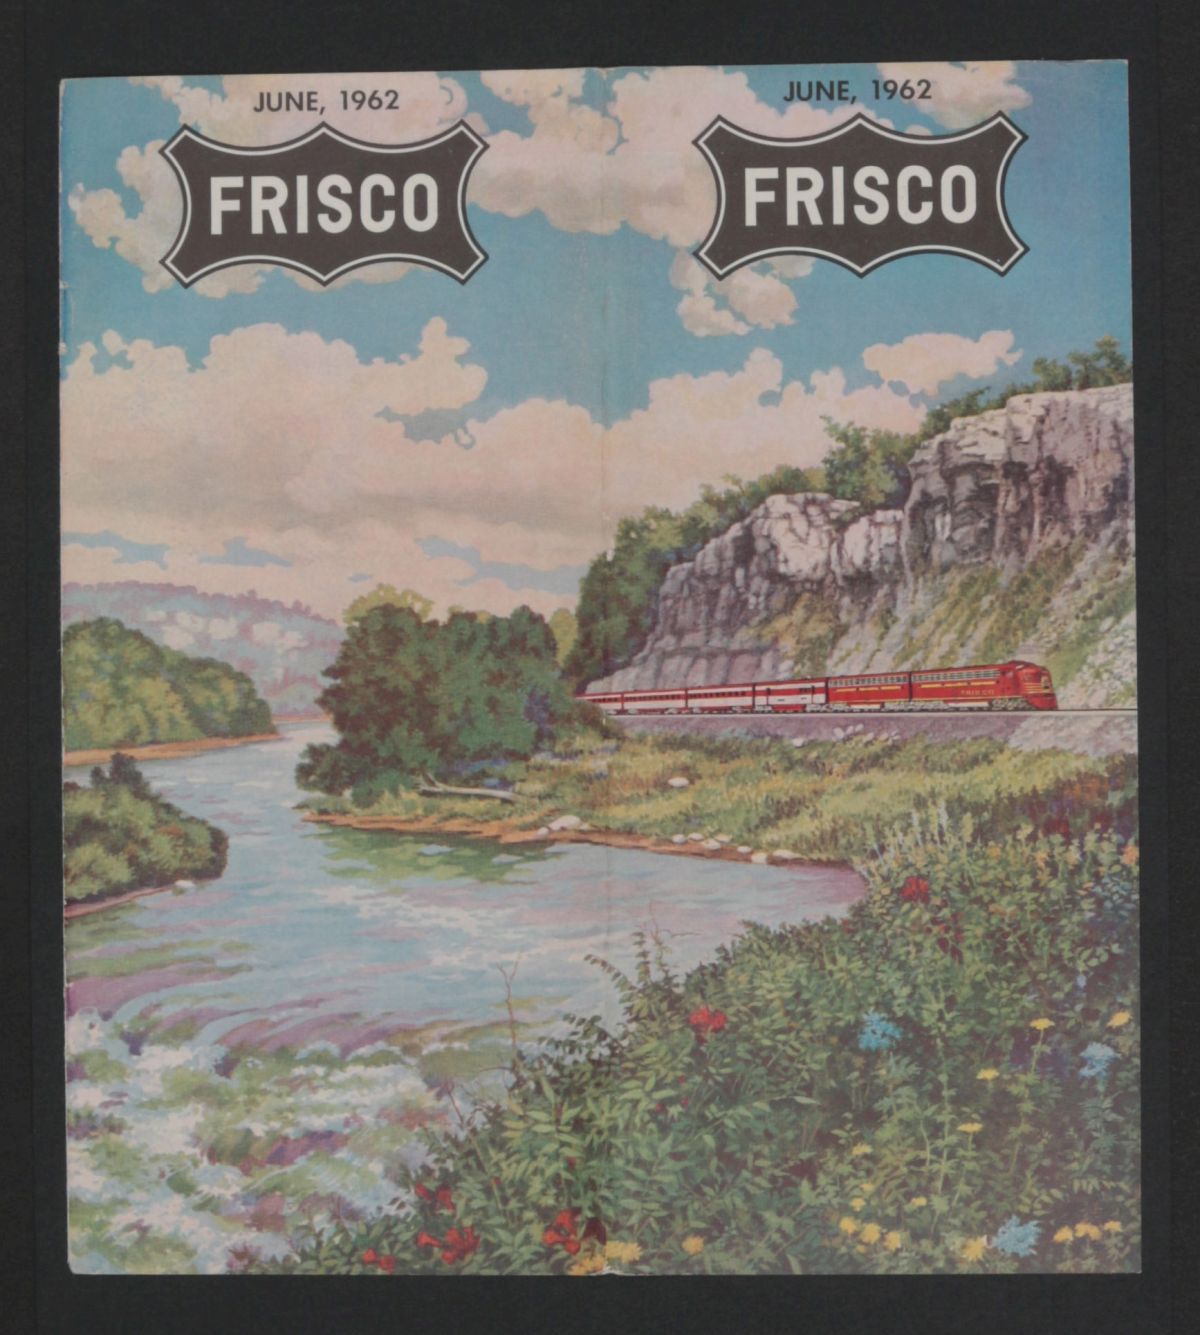 FRISCO EMD TRADE CARDS, BLOTTER AND OTHER EPHEMERA